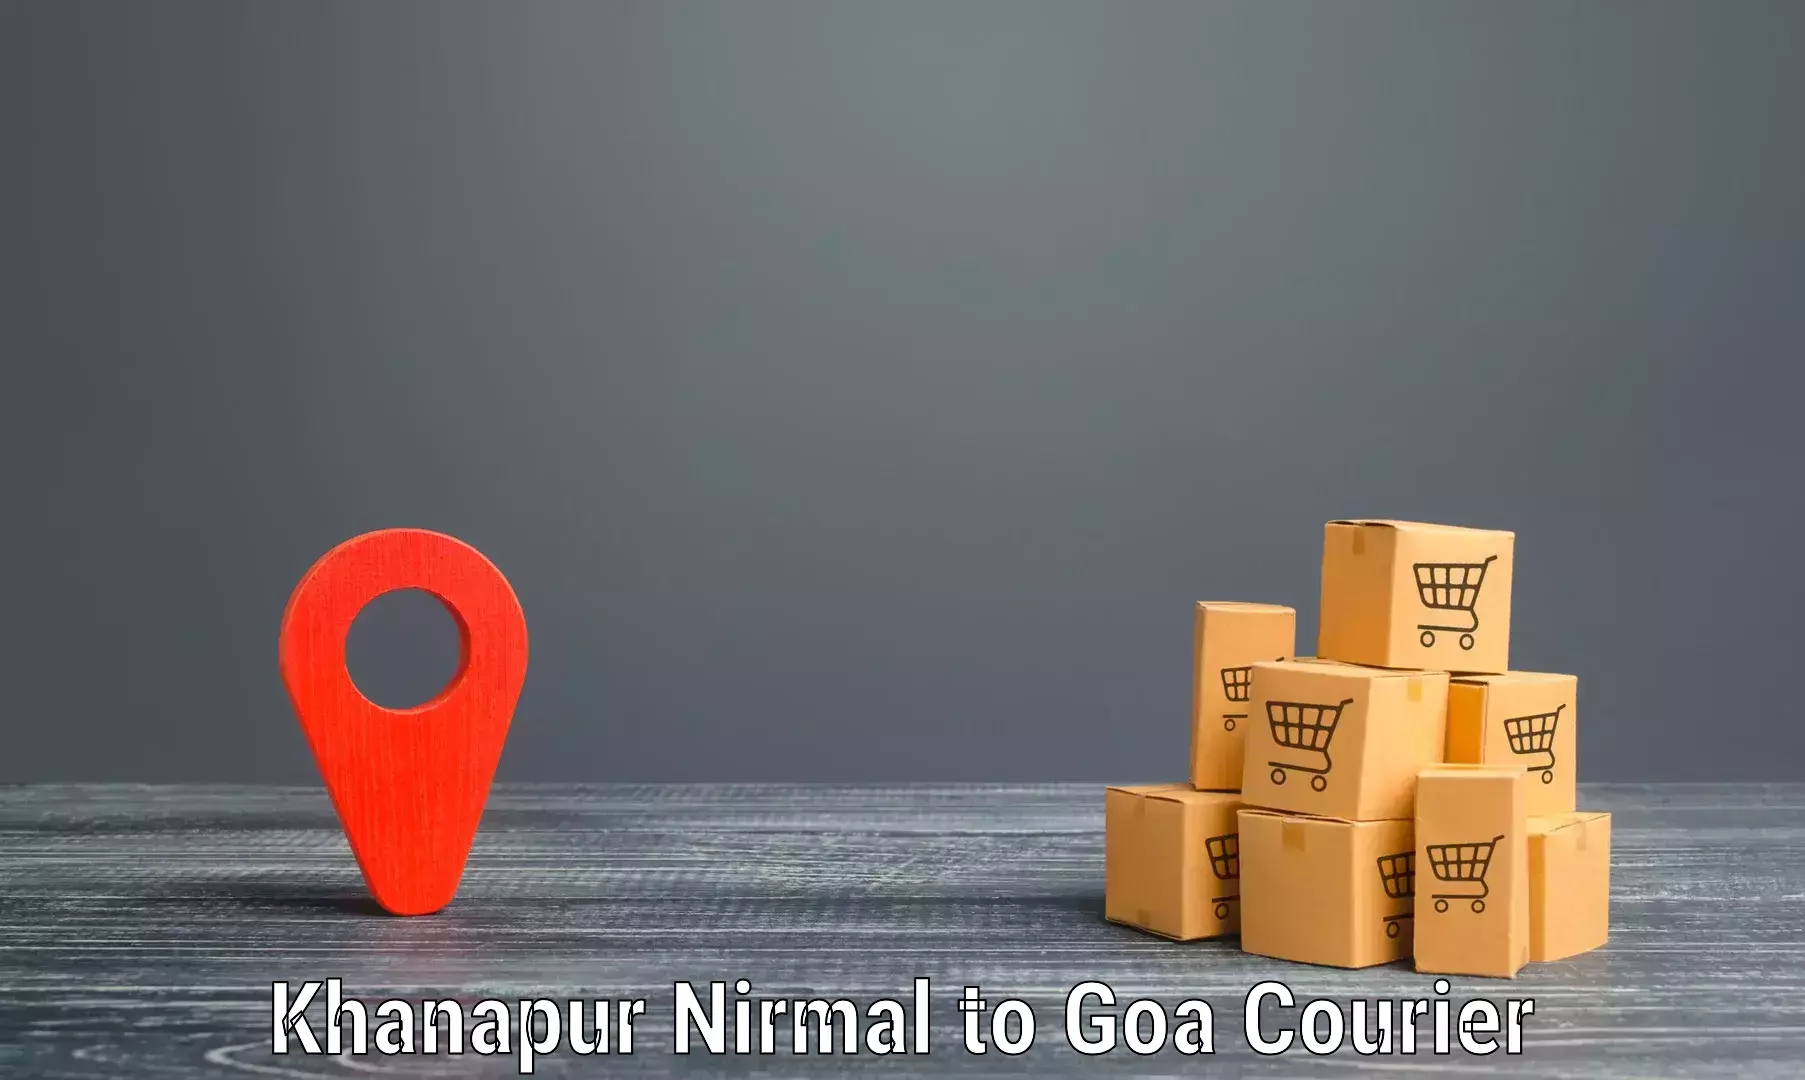 Courier service partnerships in Khanapur Nirmal to Panaji